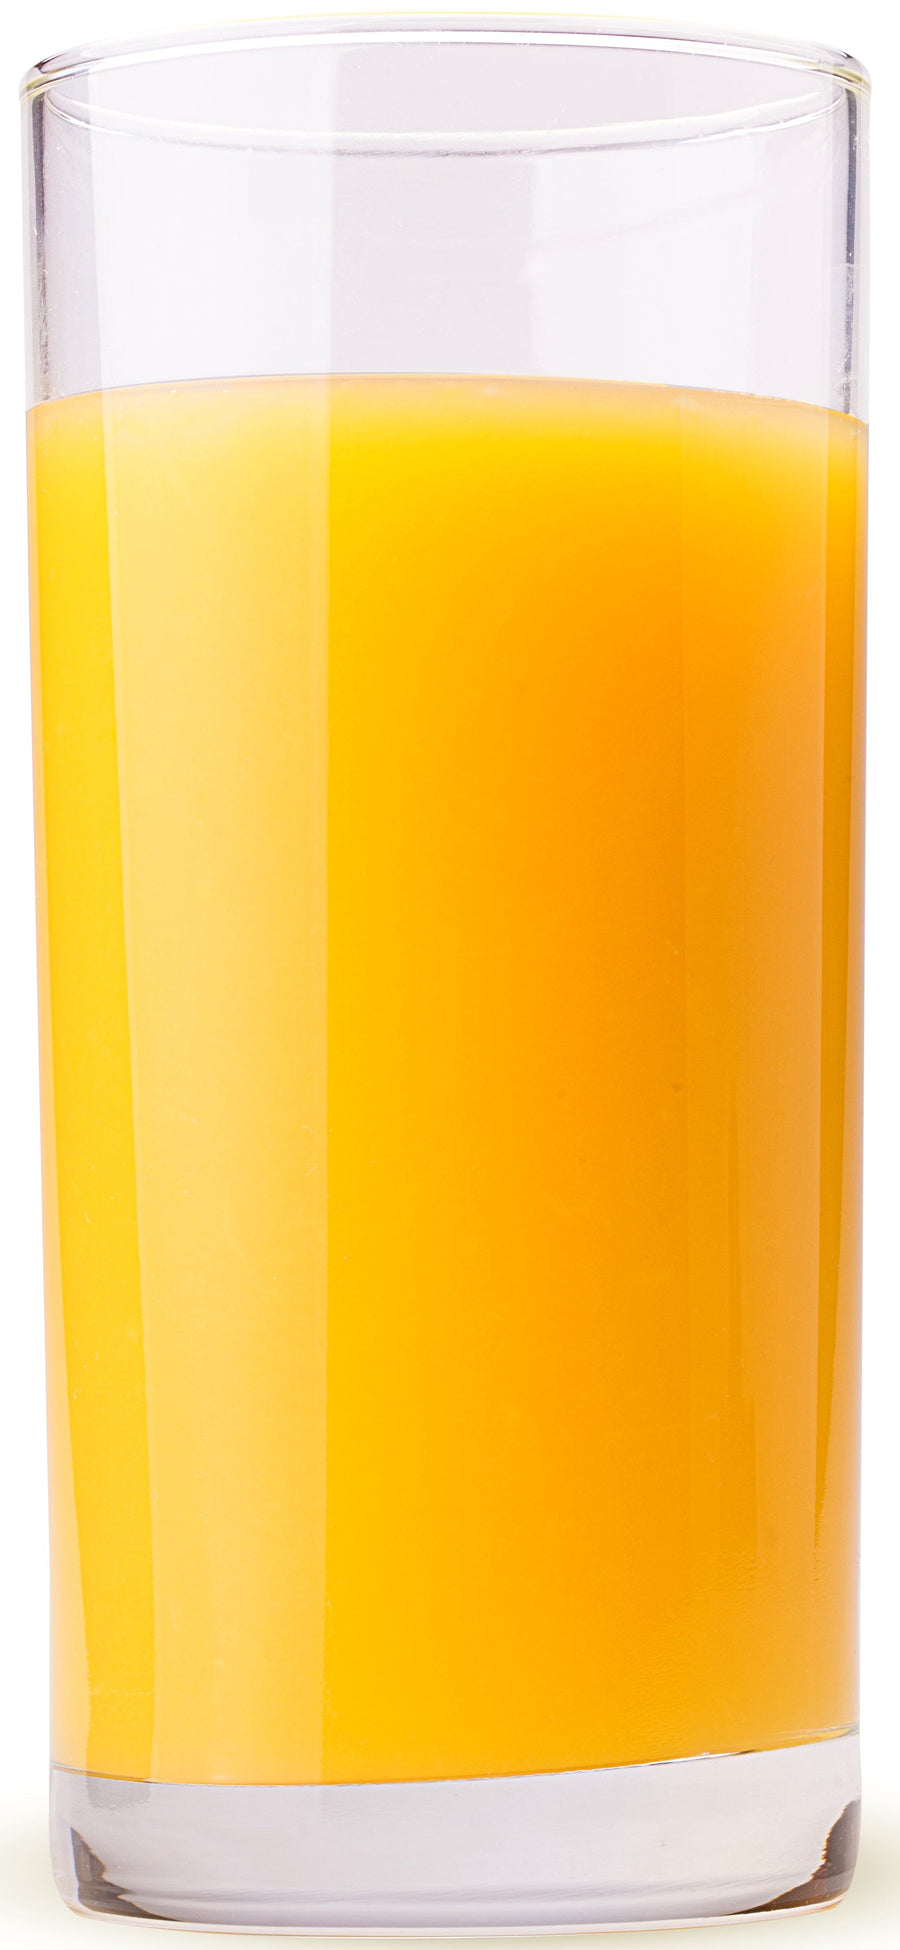 Glass full of Orange Juice made from ZNF Orange juice Powder